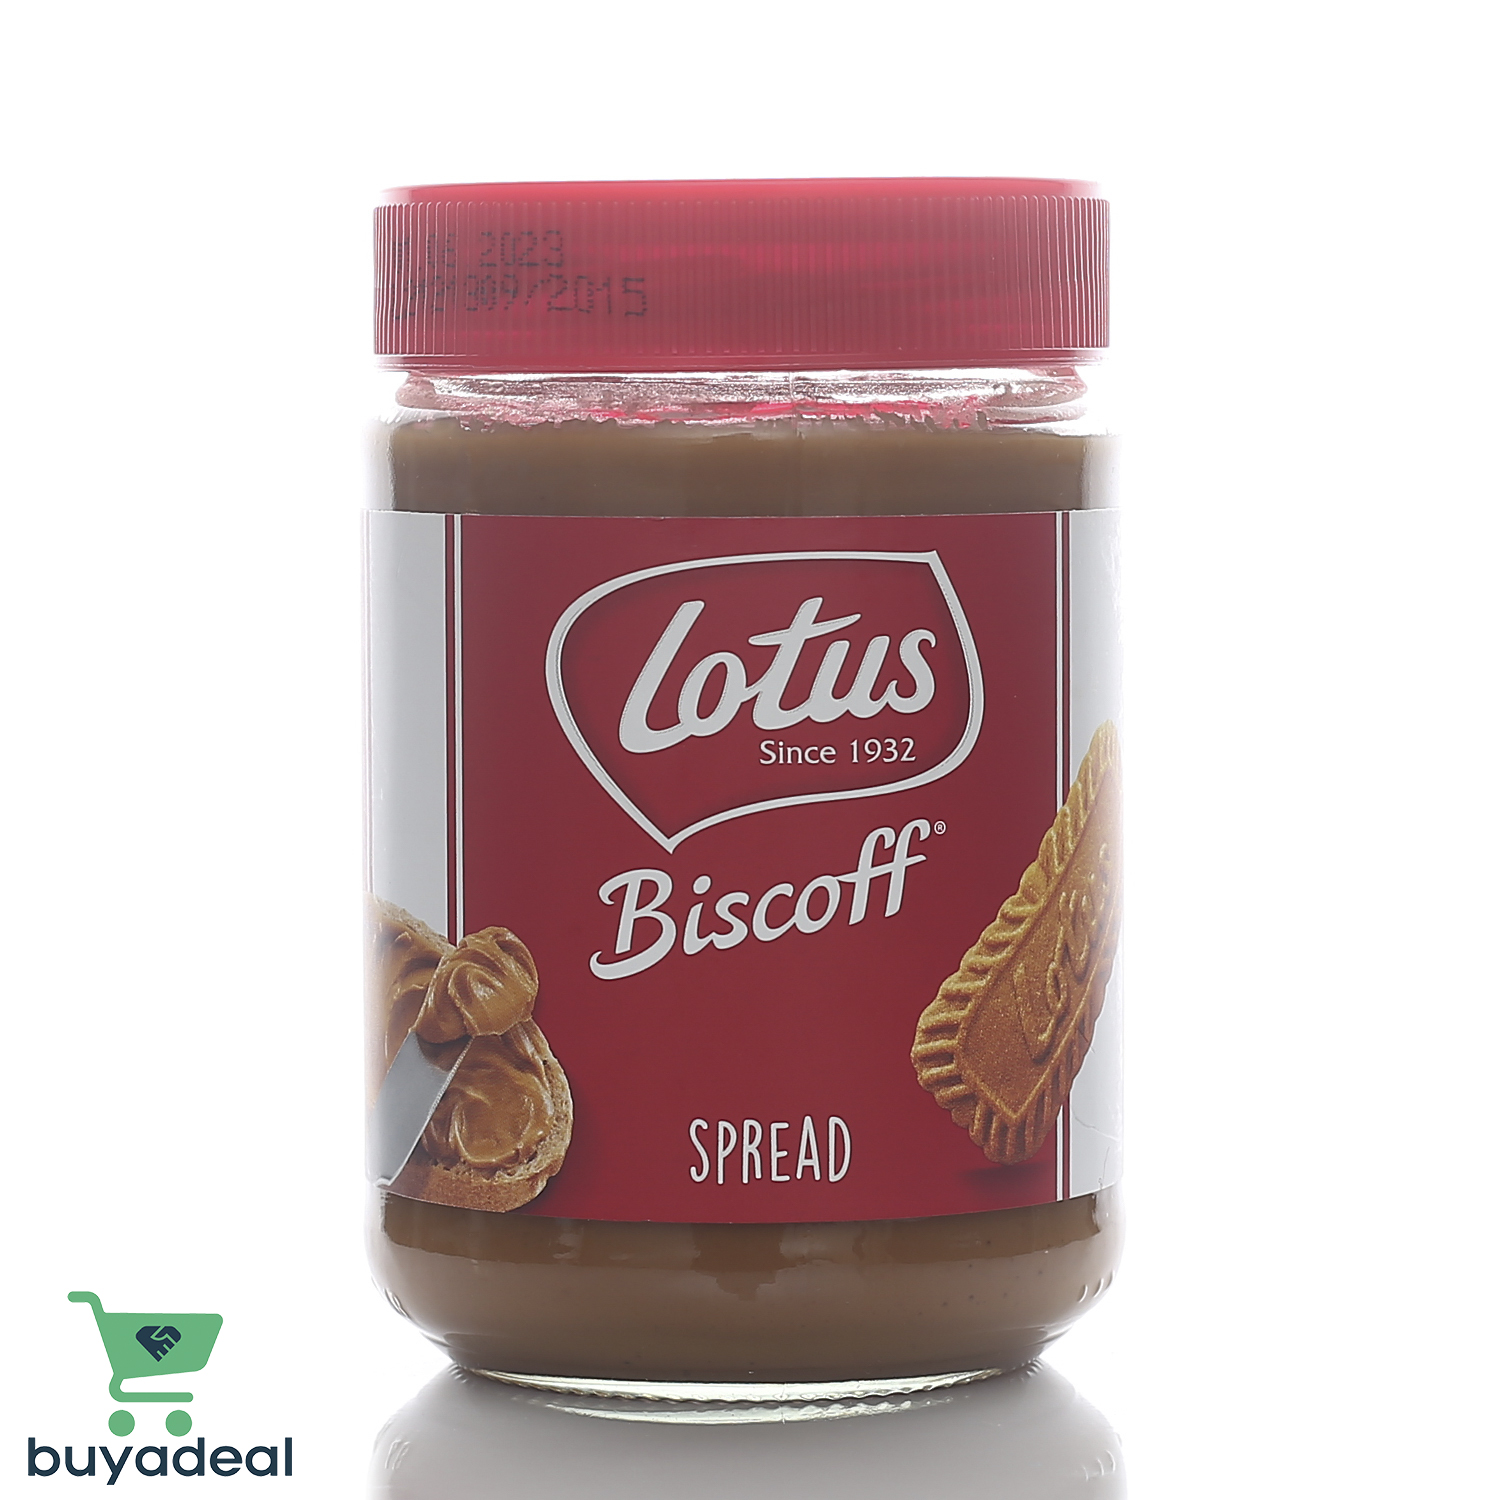 Buyadeal Product Lotus Biscoff Biscuit Spread- 400g